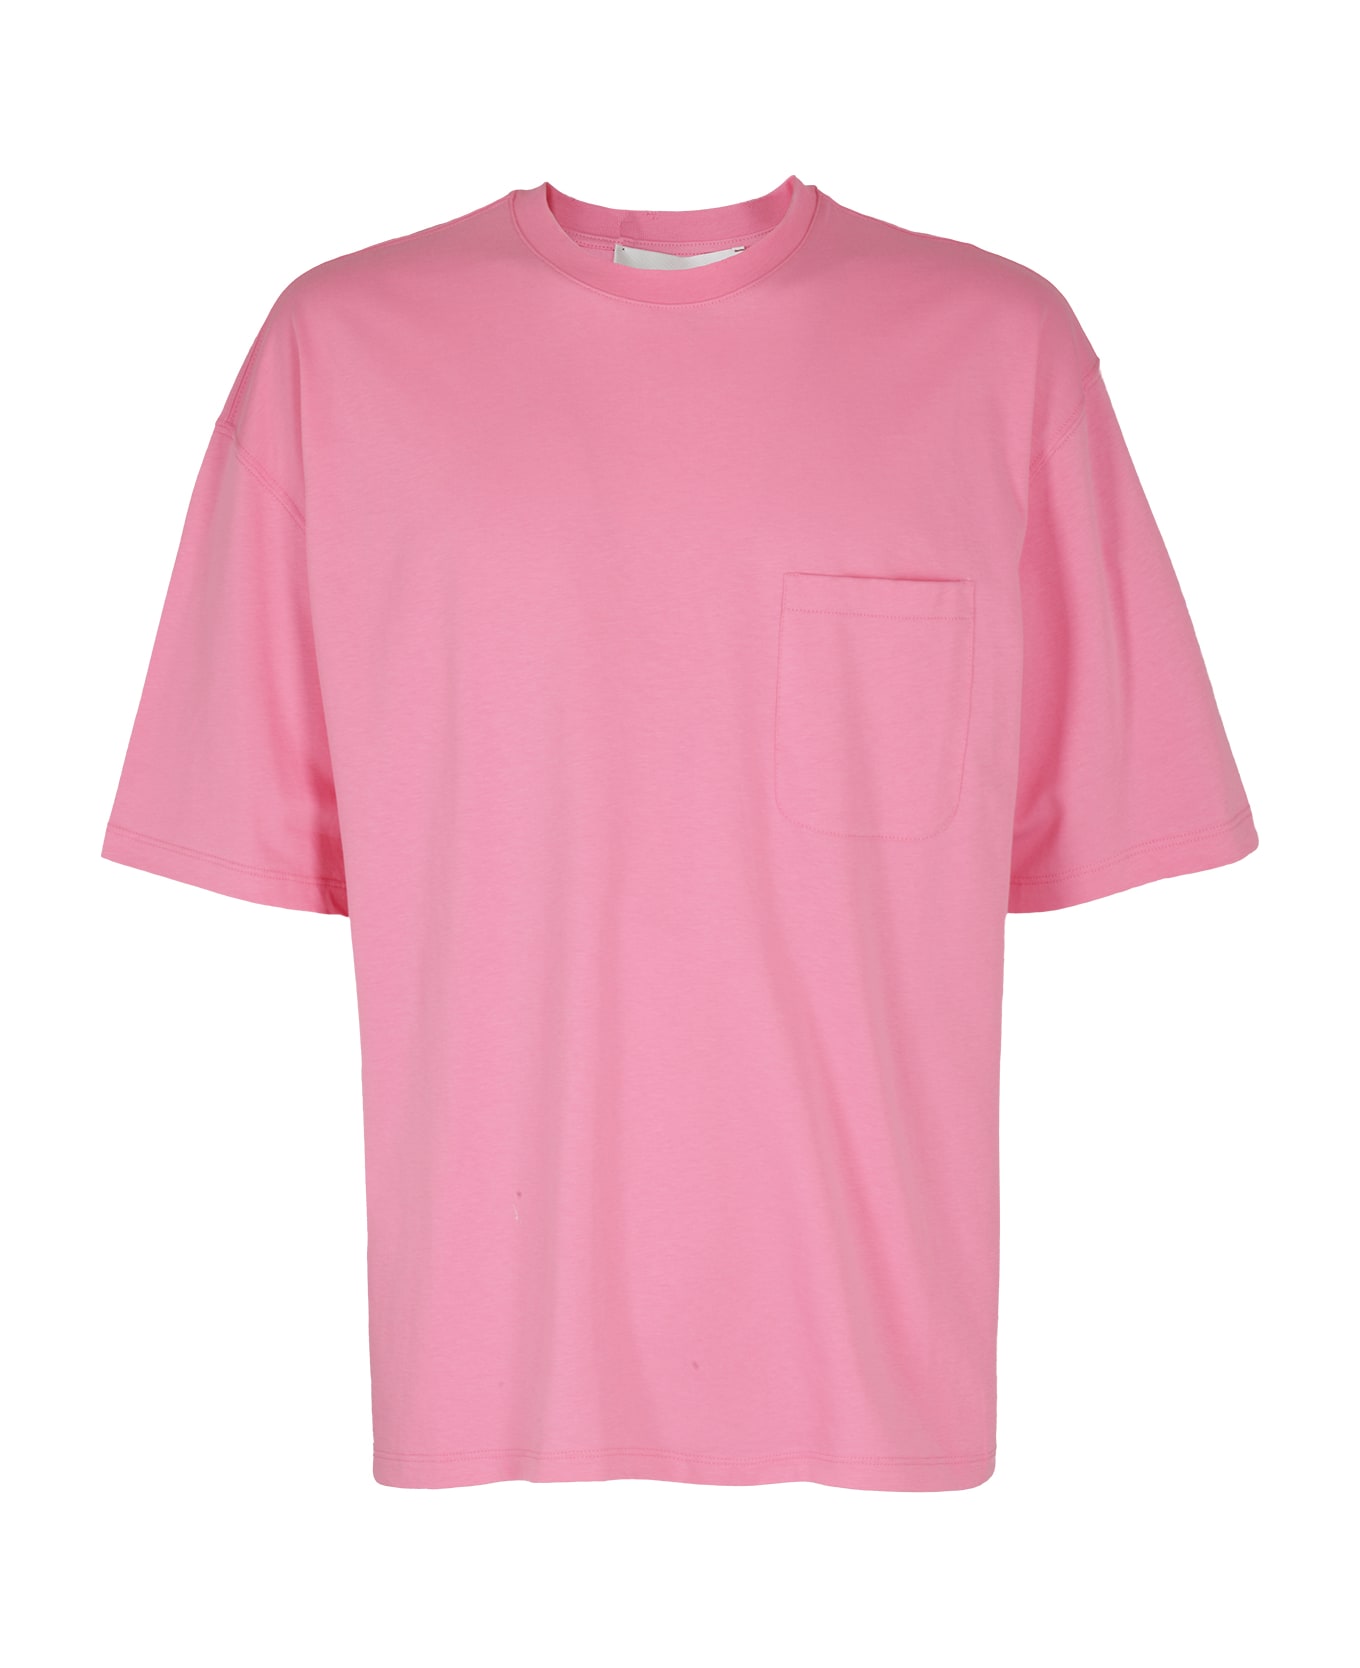 Amaranto Jersey - M Pink